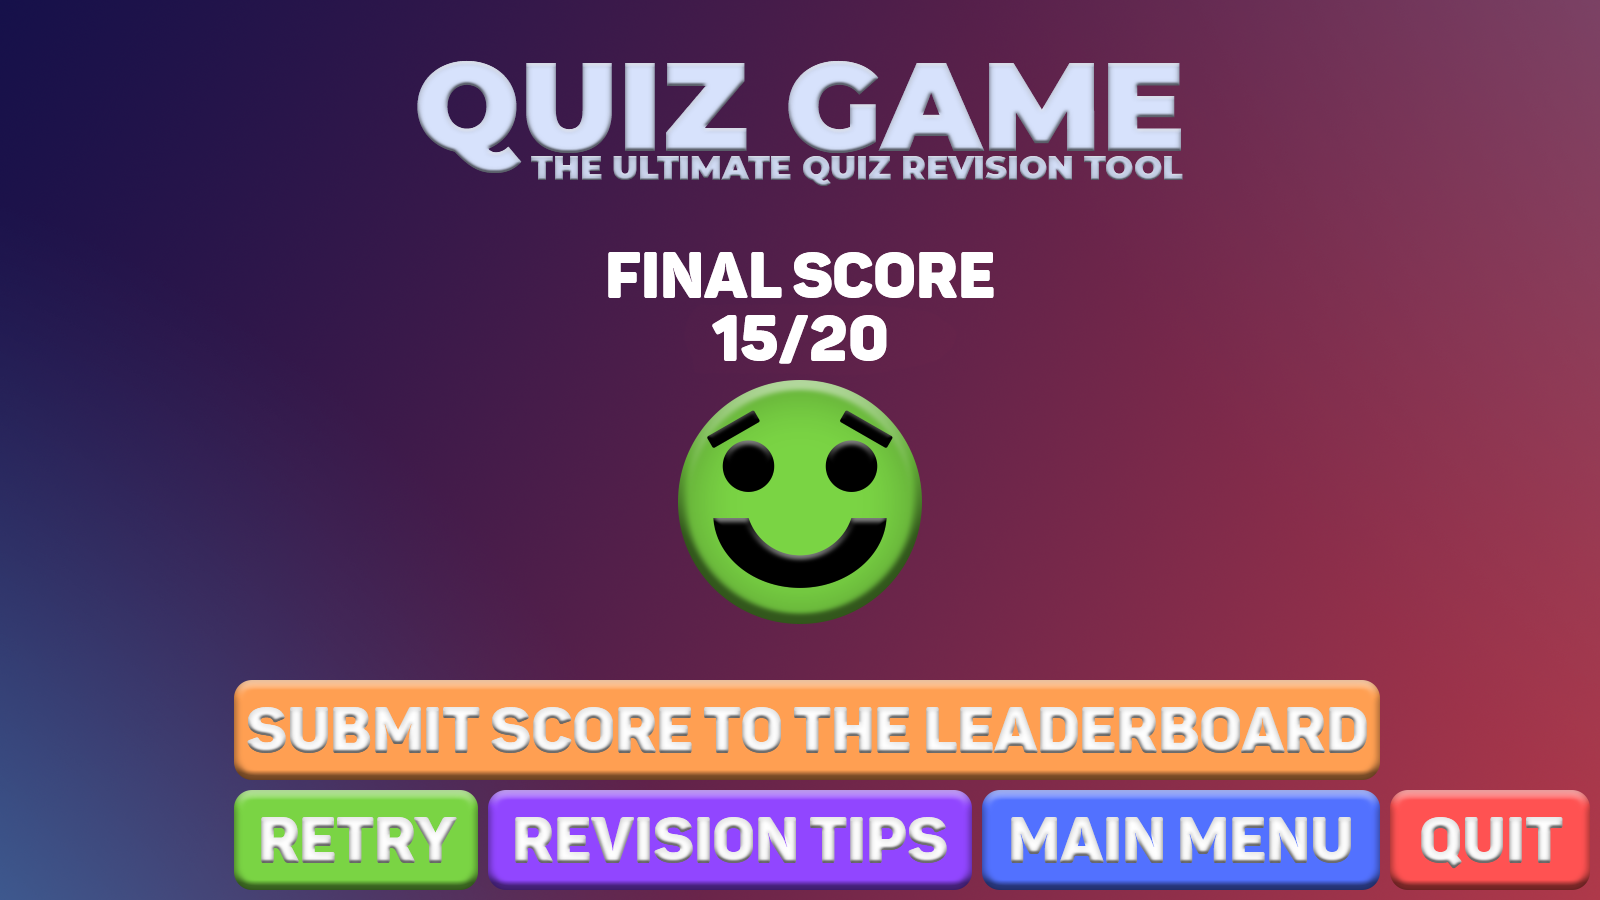 Post-quiz screen that shows score